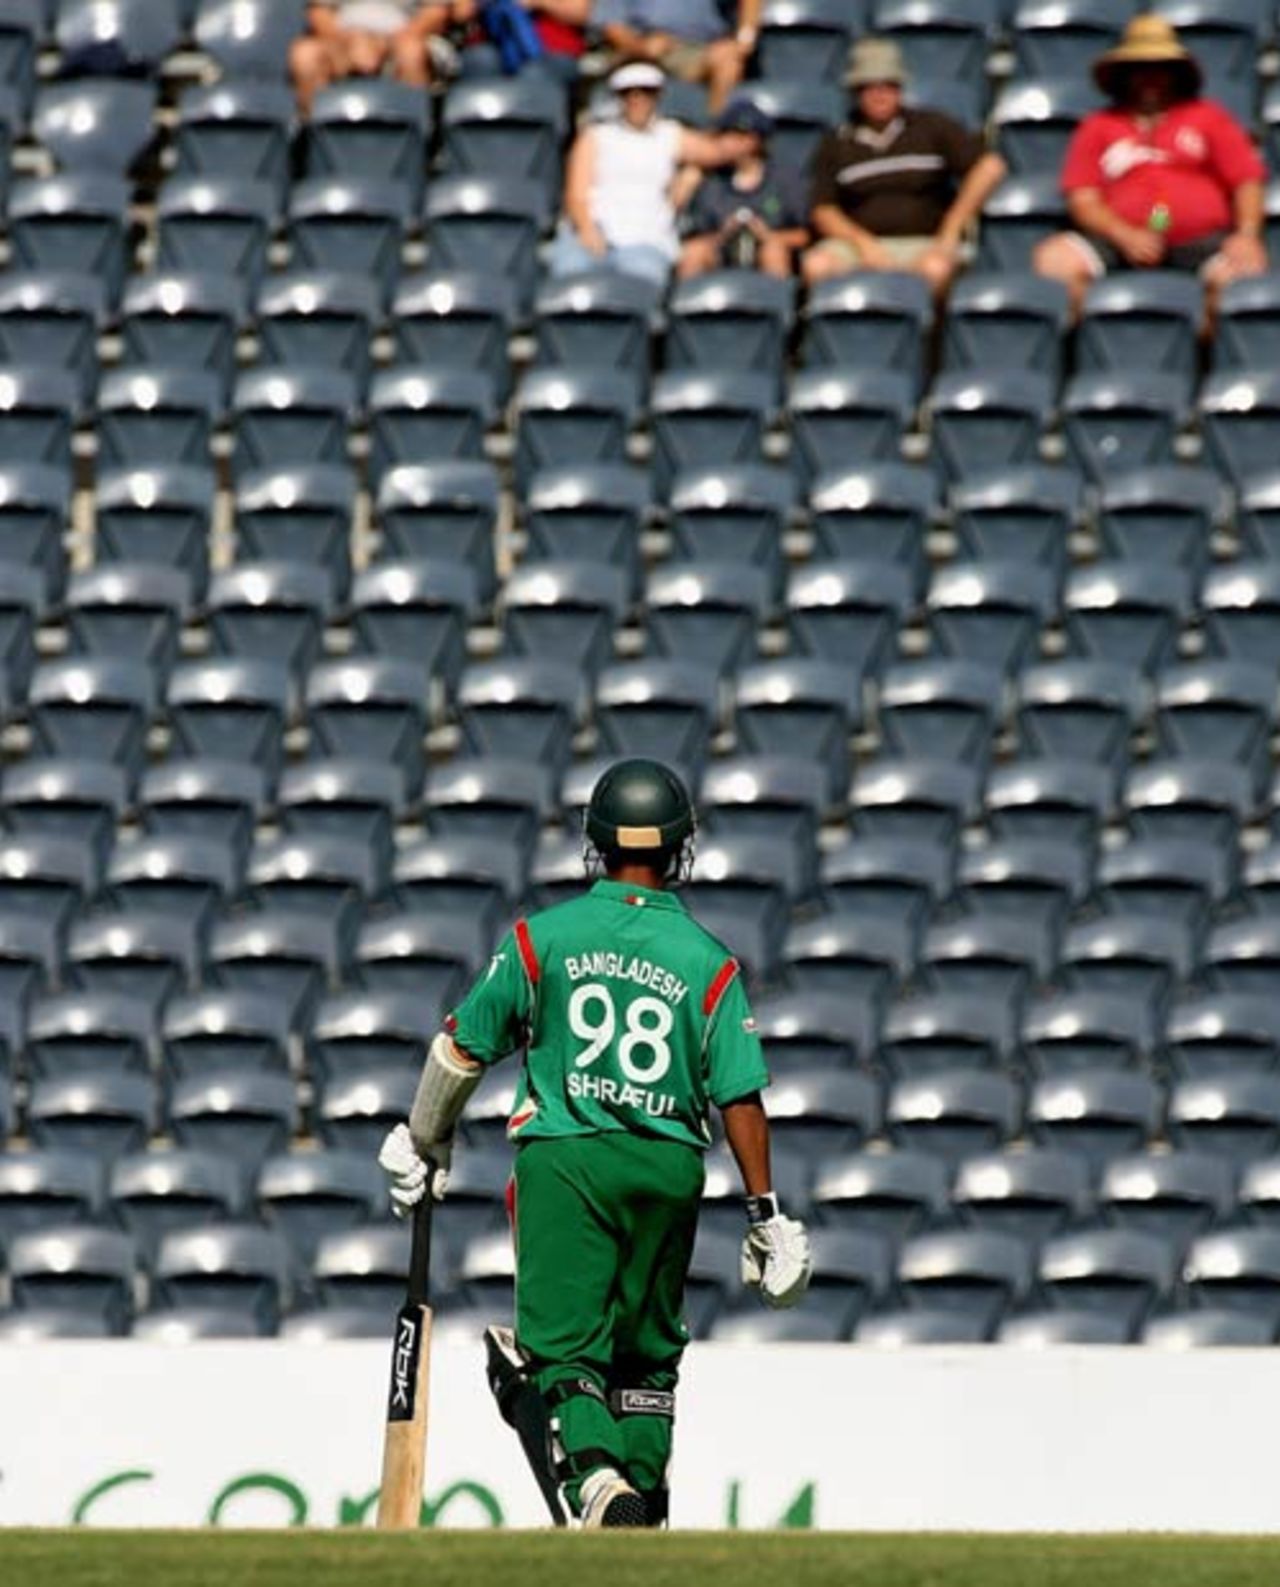 It's a long, lonely walk back for the captain Mohammad Ashraful, Australia v Bangladesh, 2nd ODI, Darwin, September 3